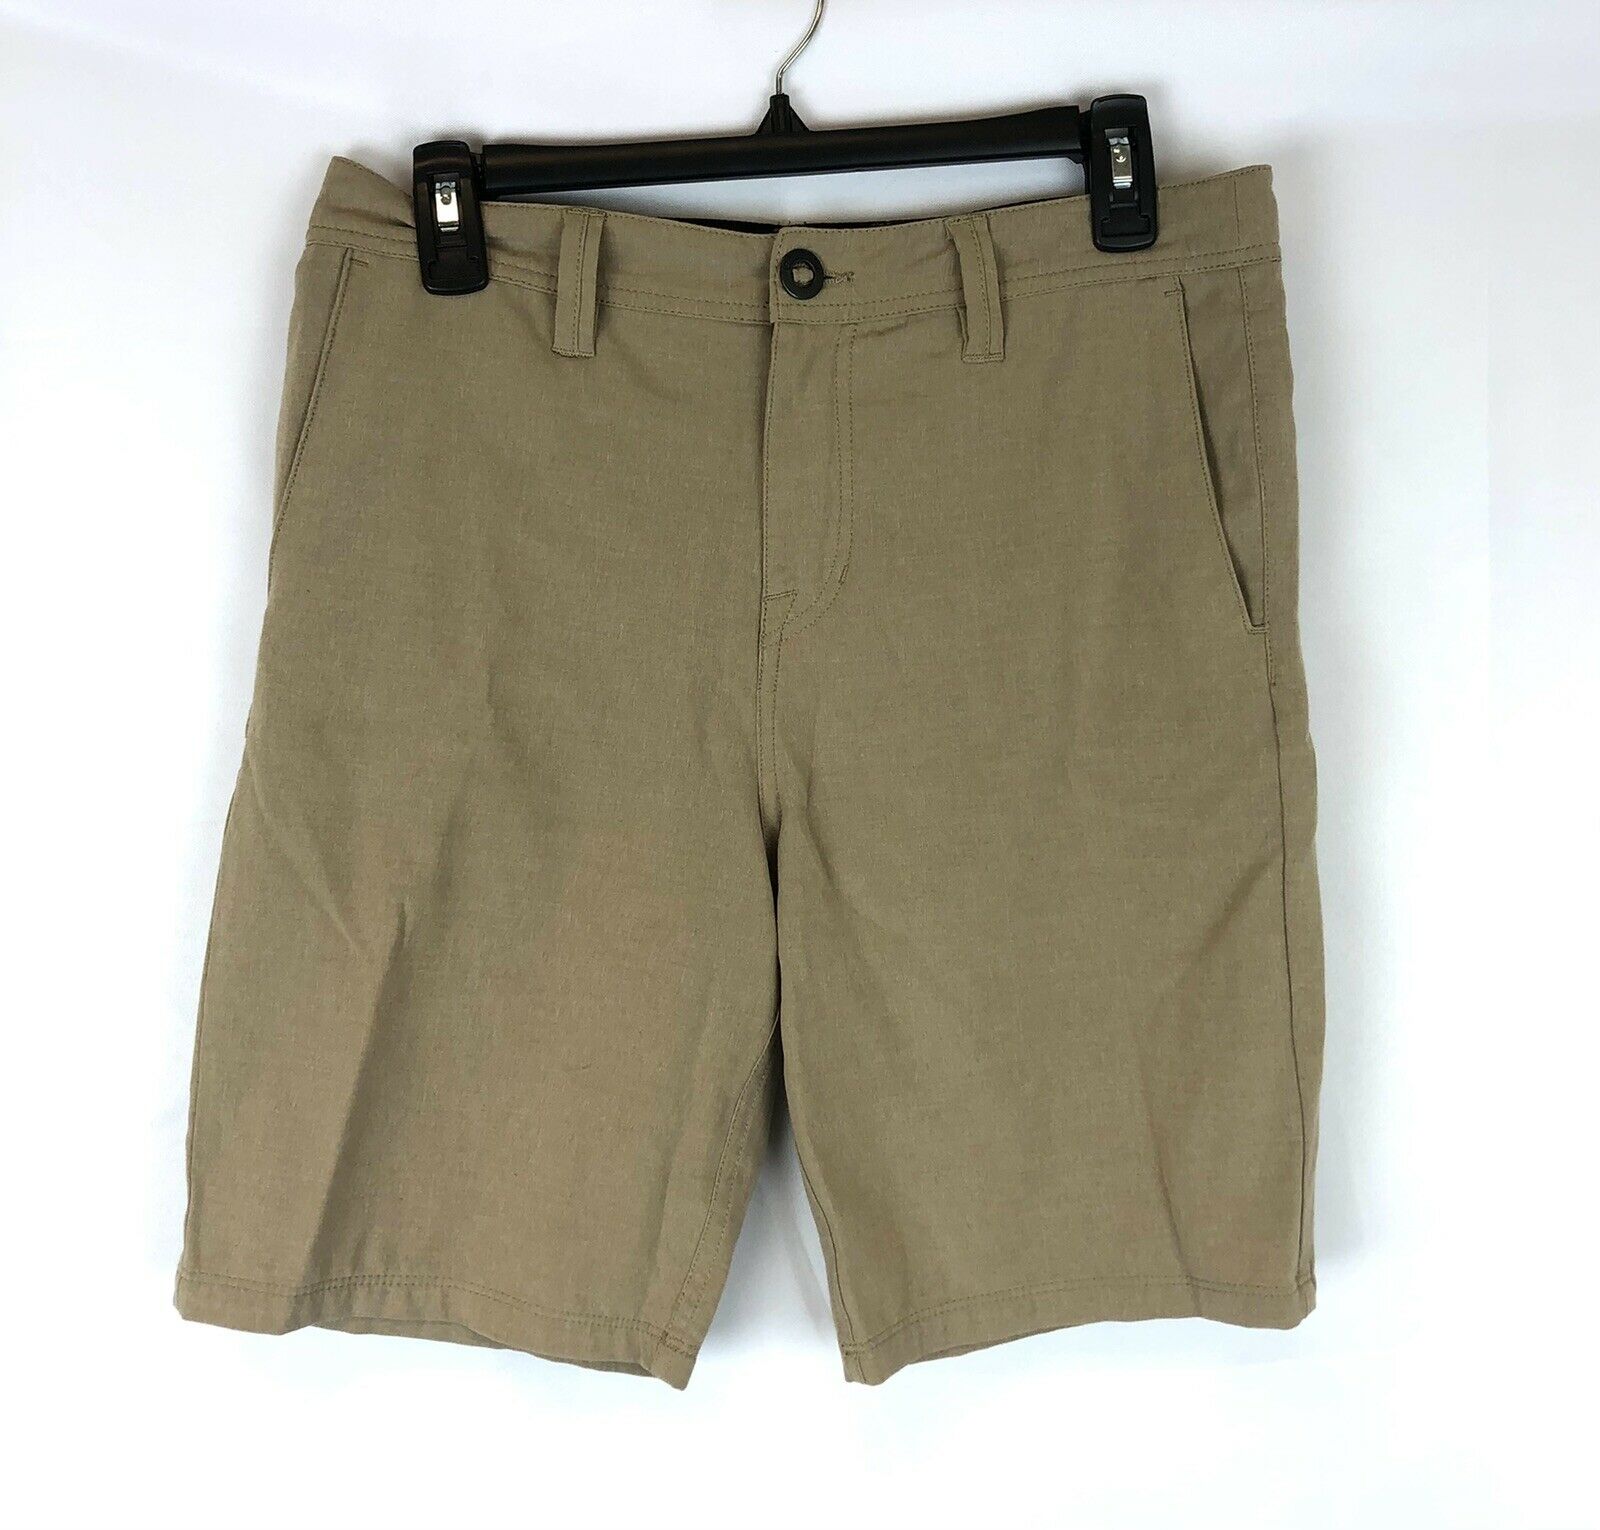 Volcom Youth Boy’s Khaki Brown Shorts Size 20, 30waist